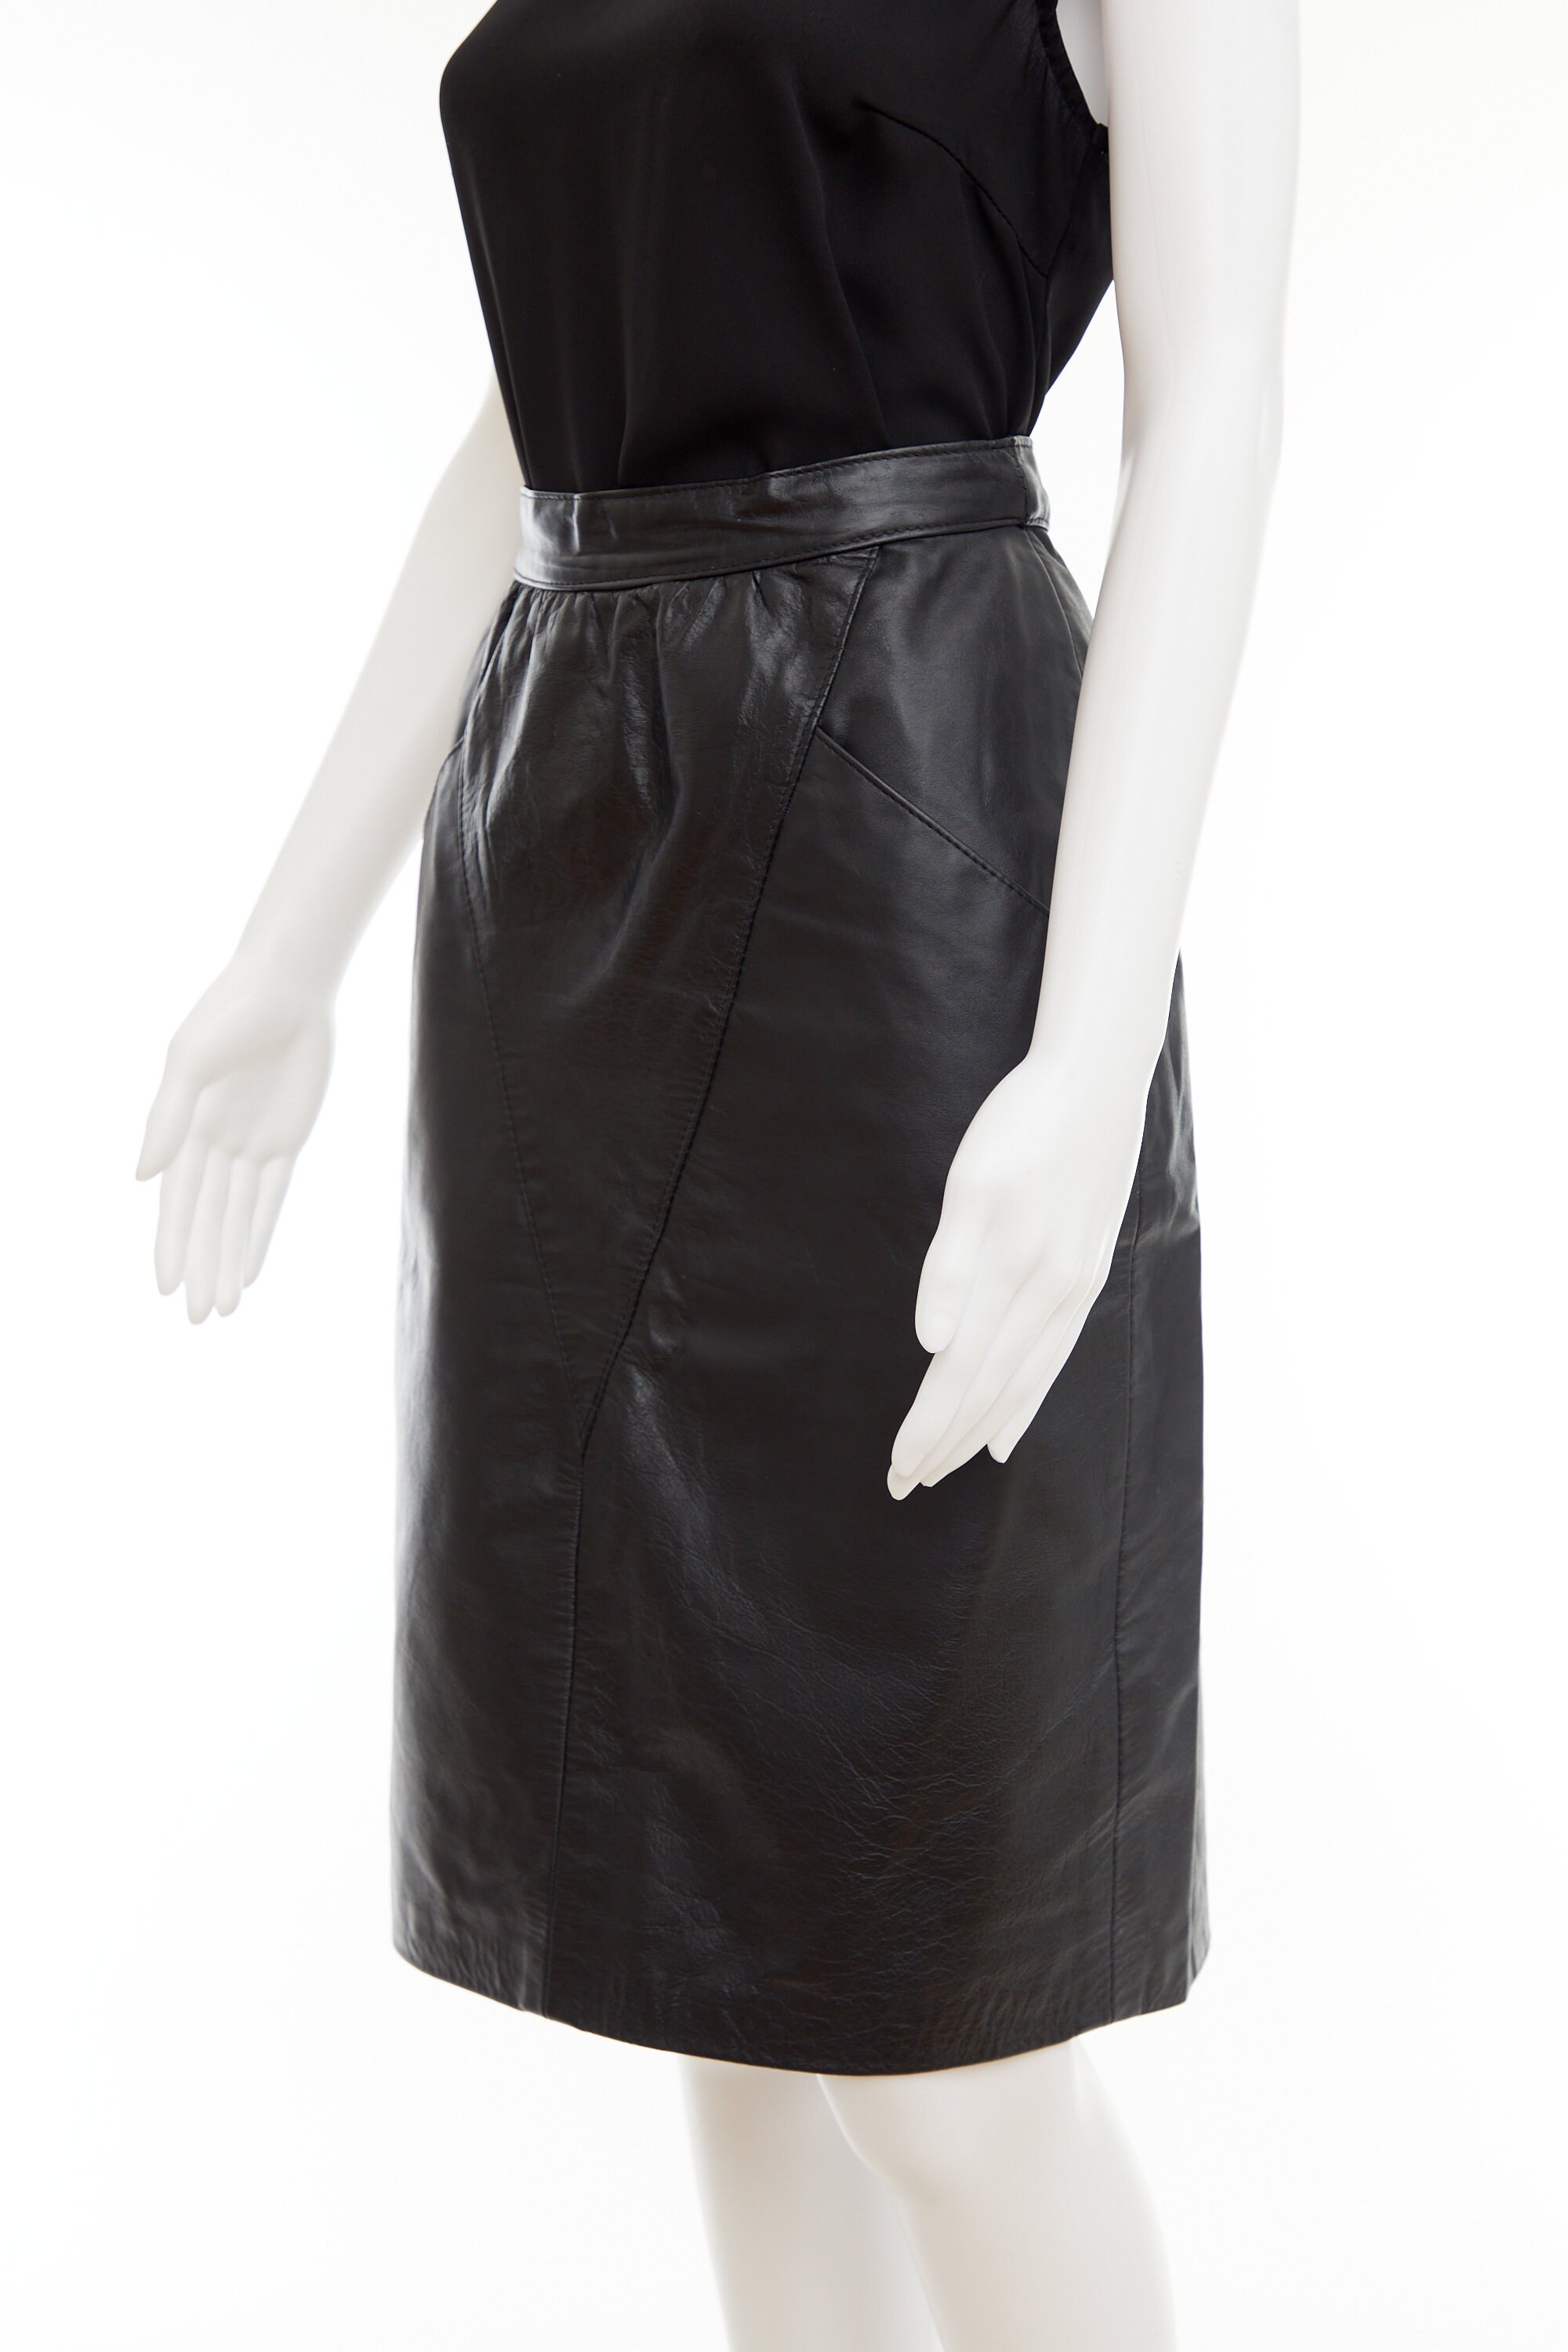 80's High Waist Black Leather Skirt / Midi Skirt approx - Etsy Canada